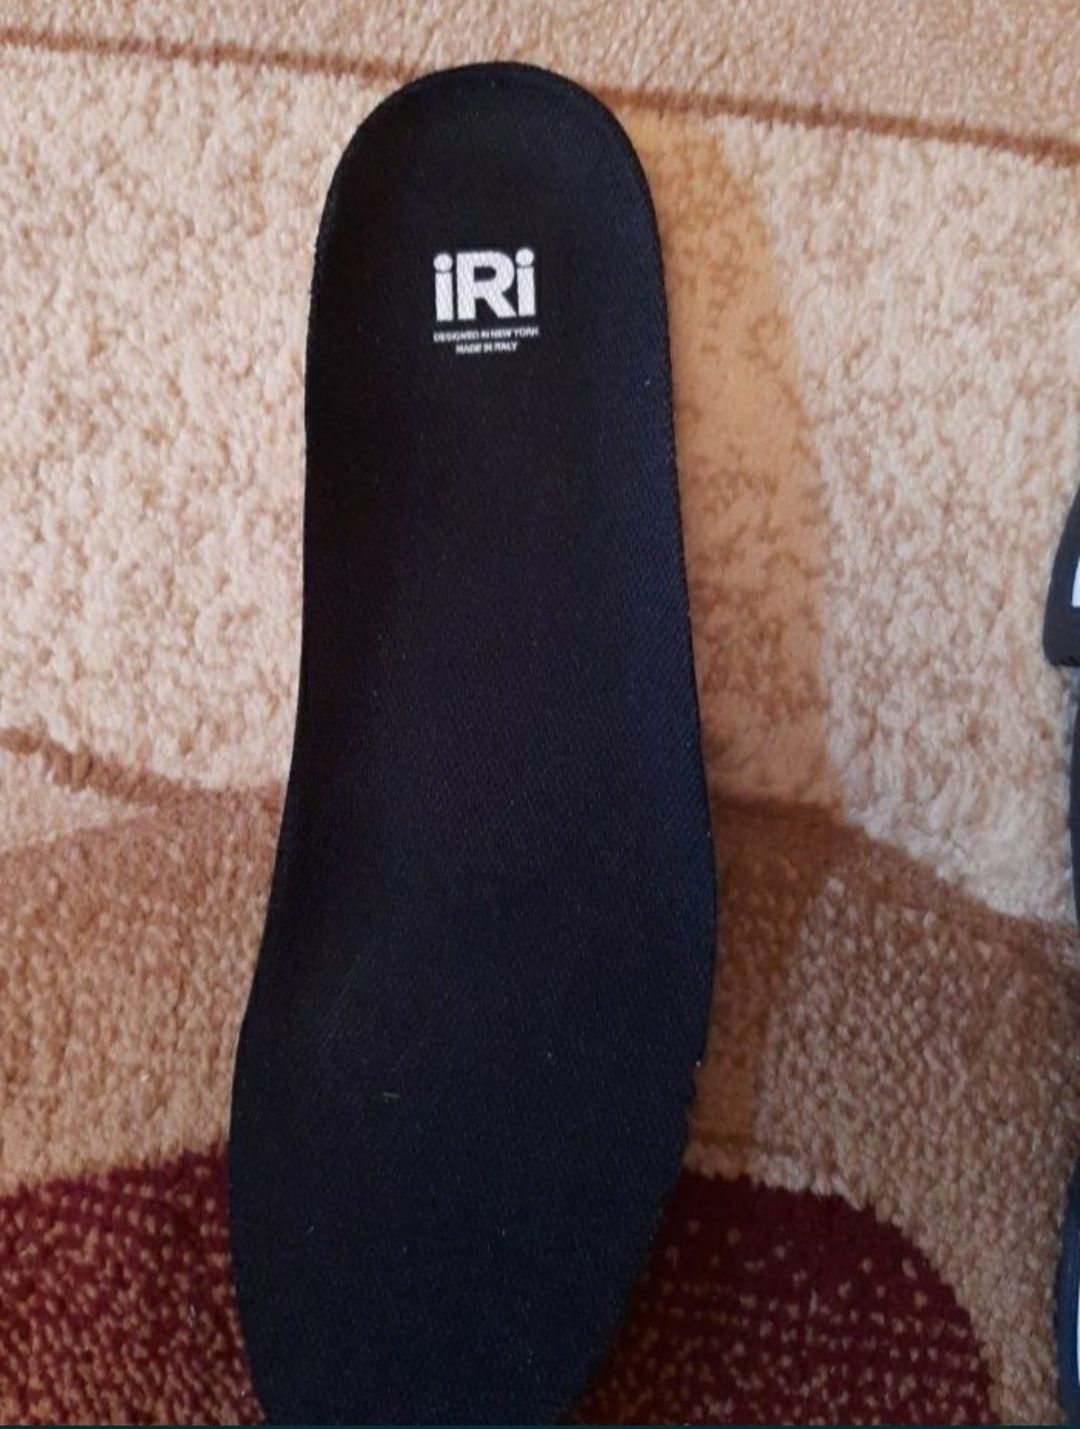 Кроссовки, сникерсы Iri,made in Italy стелька 26,5 см.